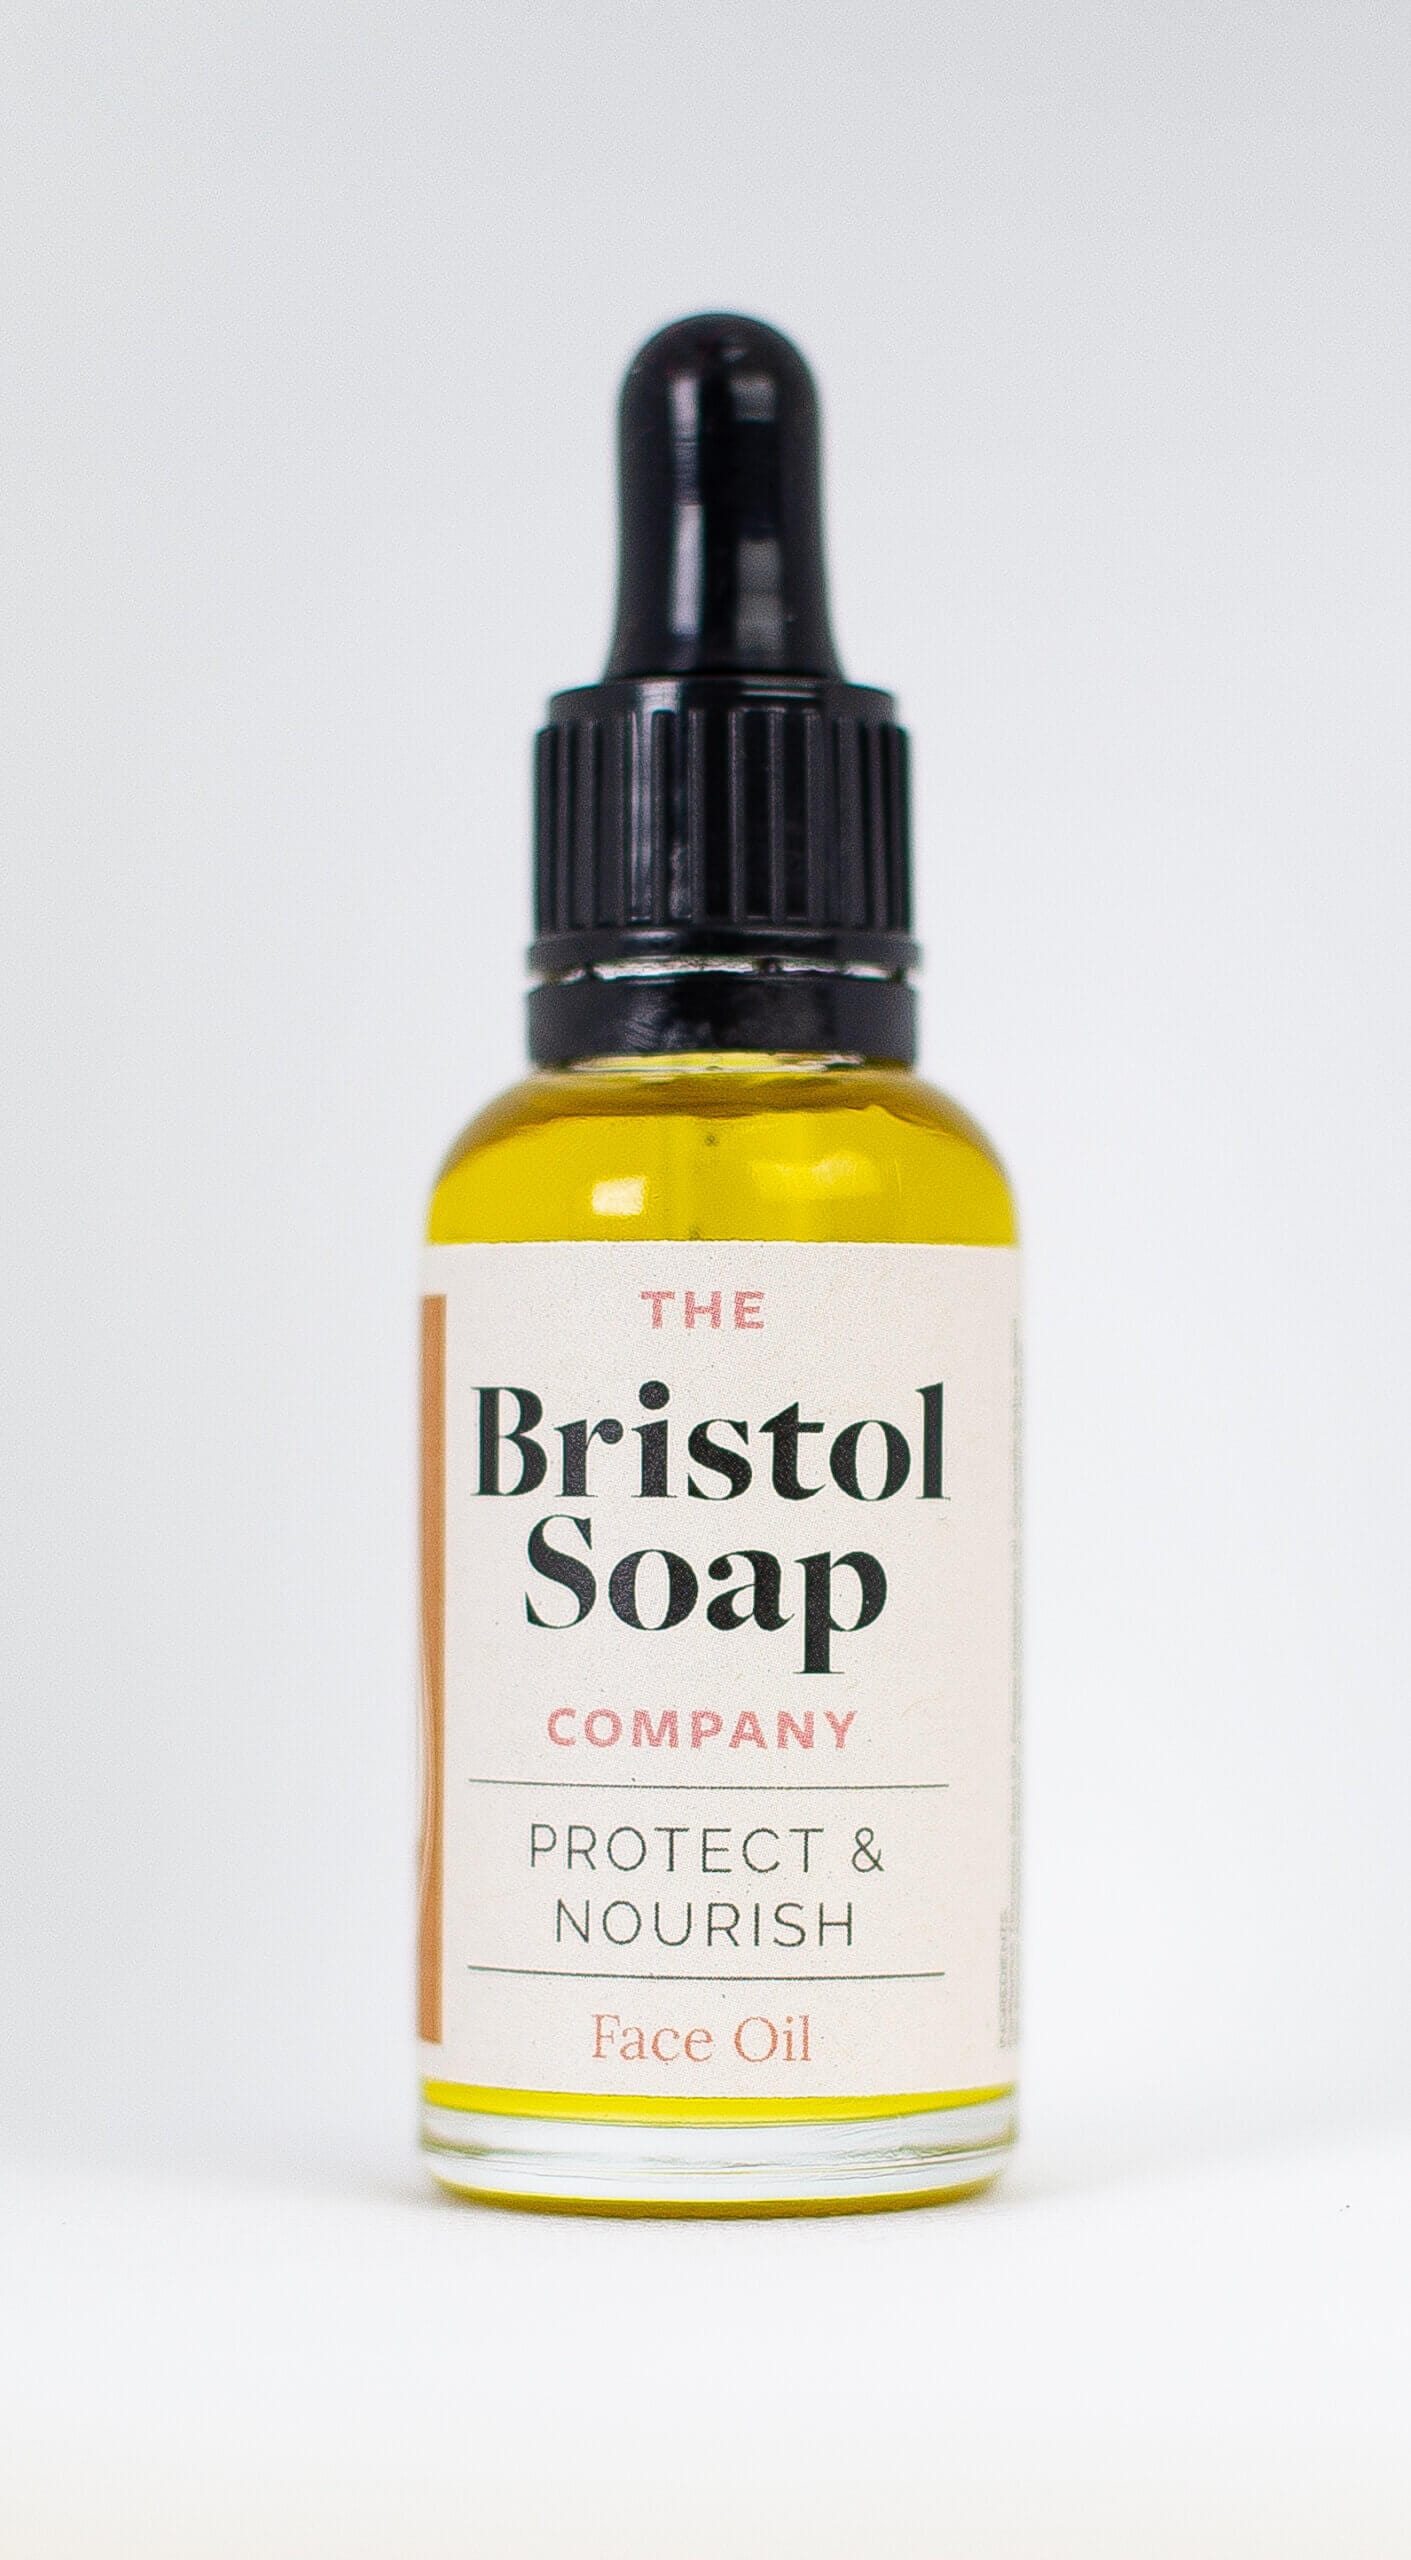 The Bristol Soap Company Face Oil Face Oil - Protect and Nourish